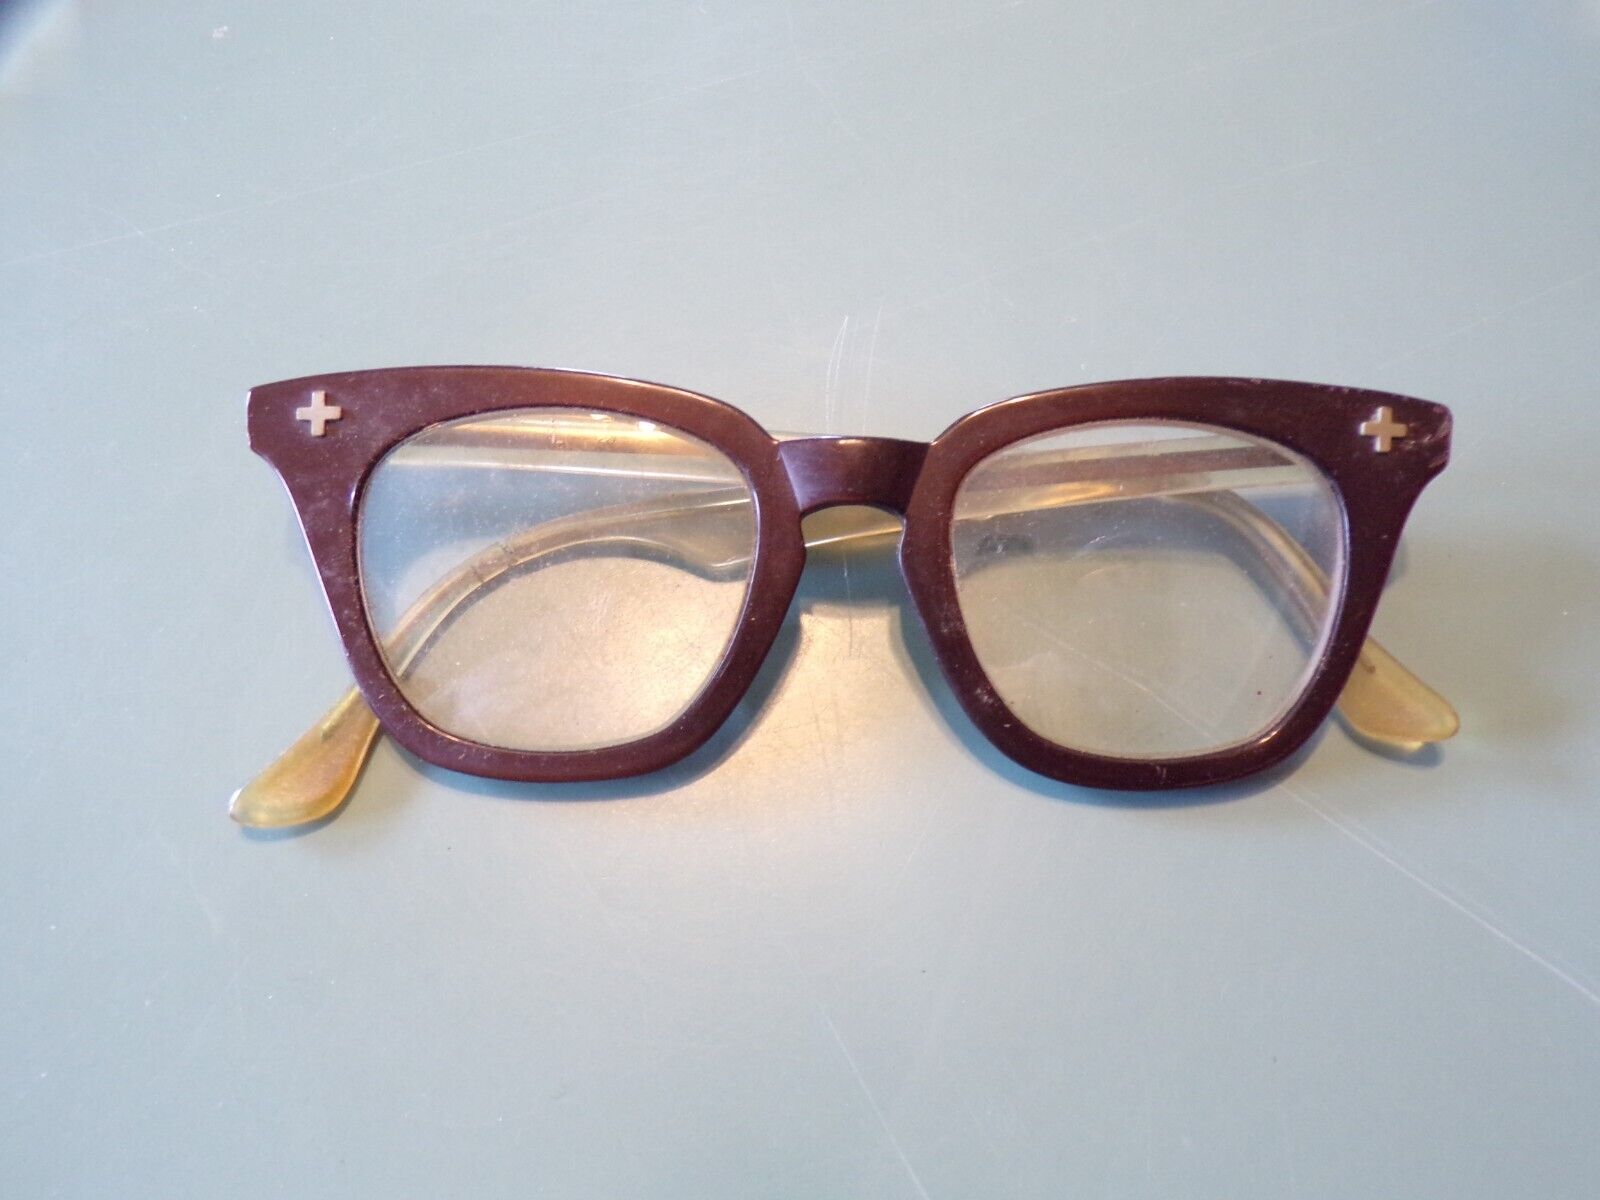 VTG Bausch & Lomb 1950's Safety Glasses